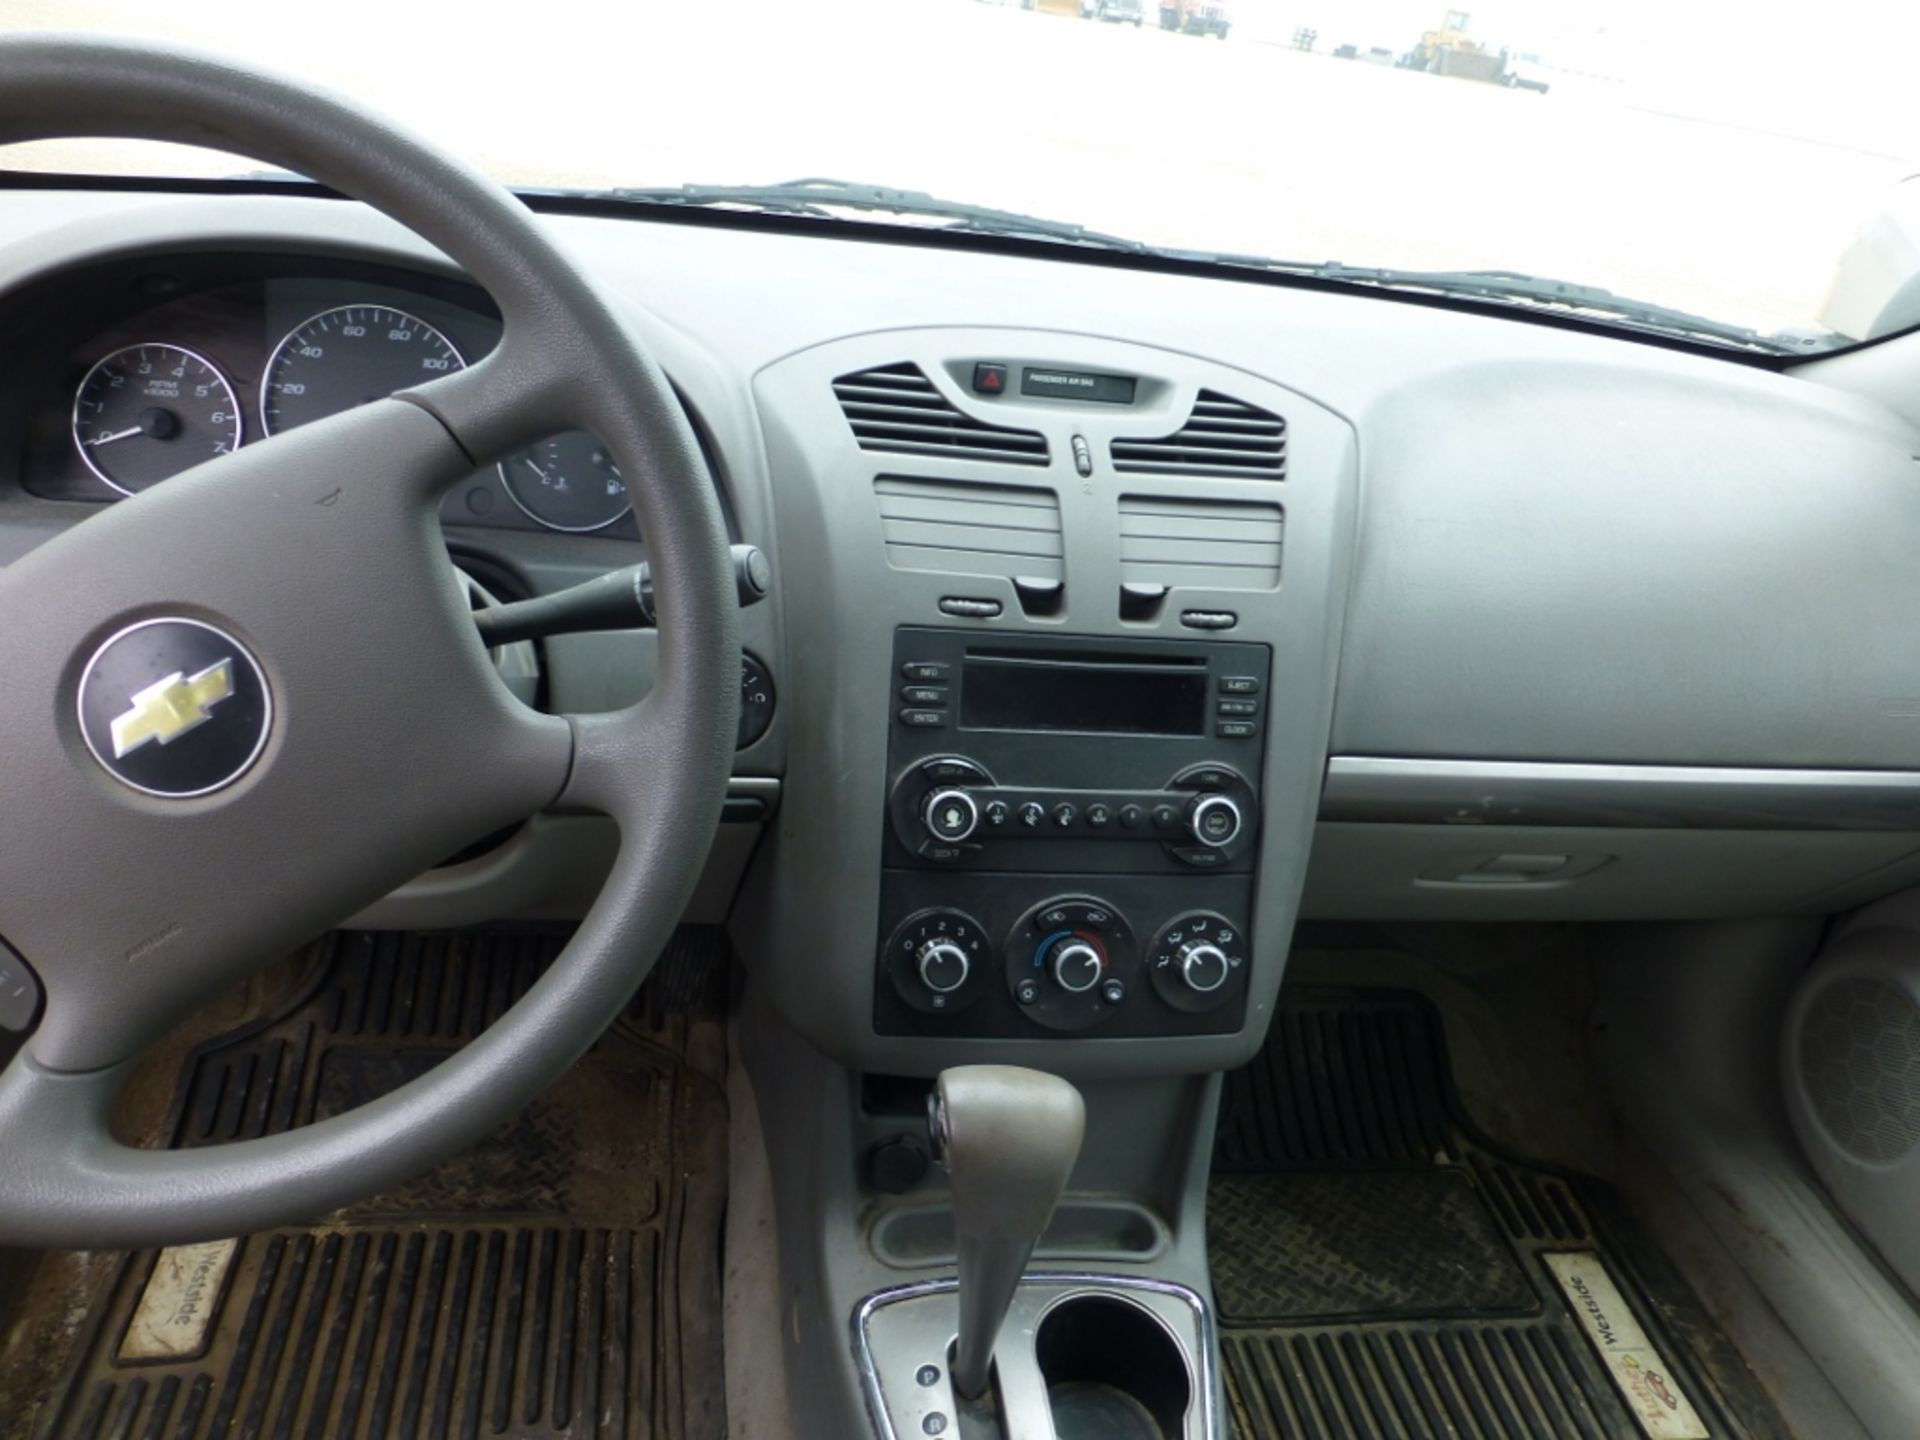 2008 Chevy Malibu, 4 door, Sedan, Silver, automatic transmission, 180,199 miles, unverified.  Tire - Image 21 of 26